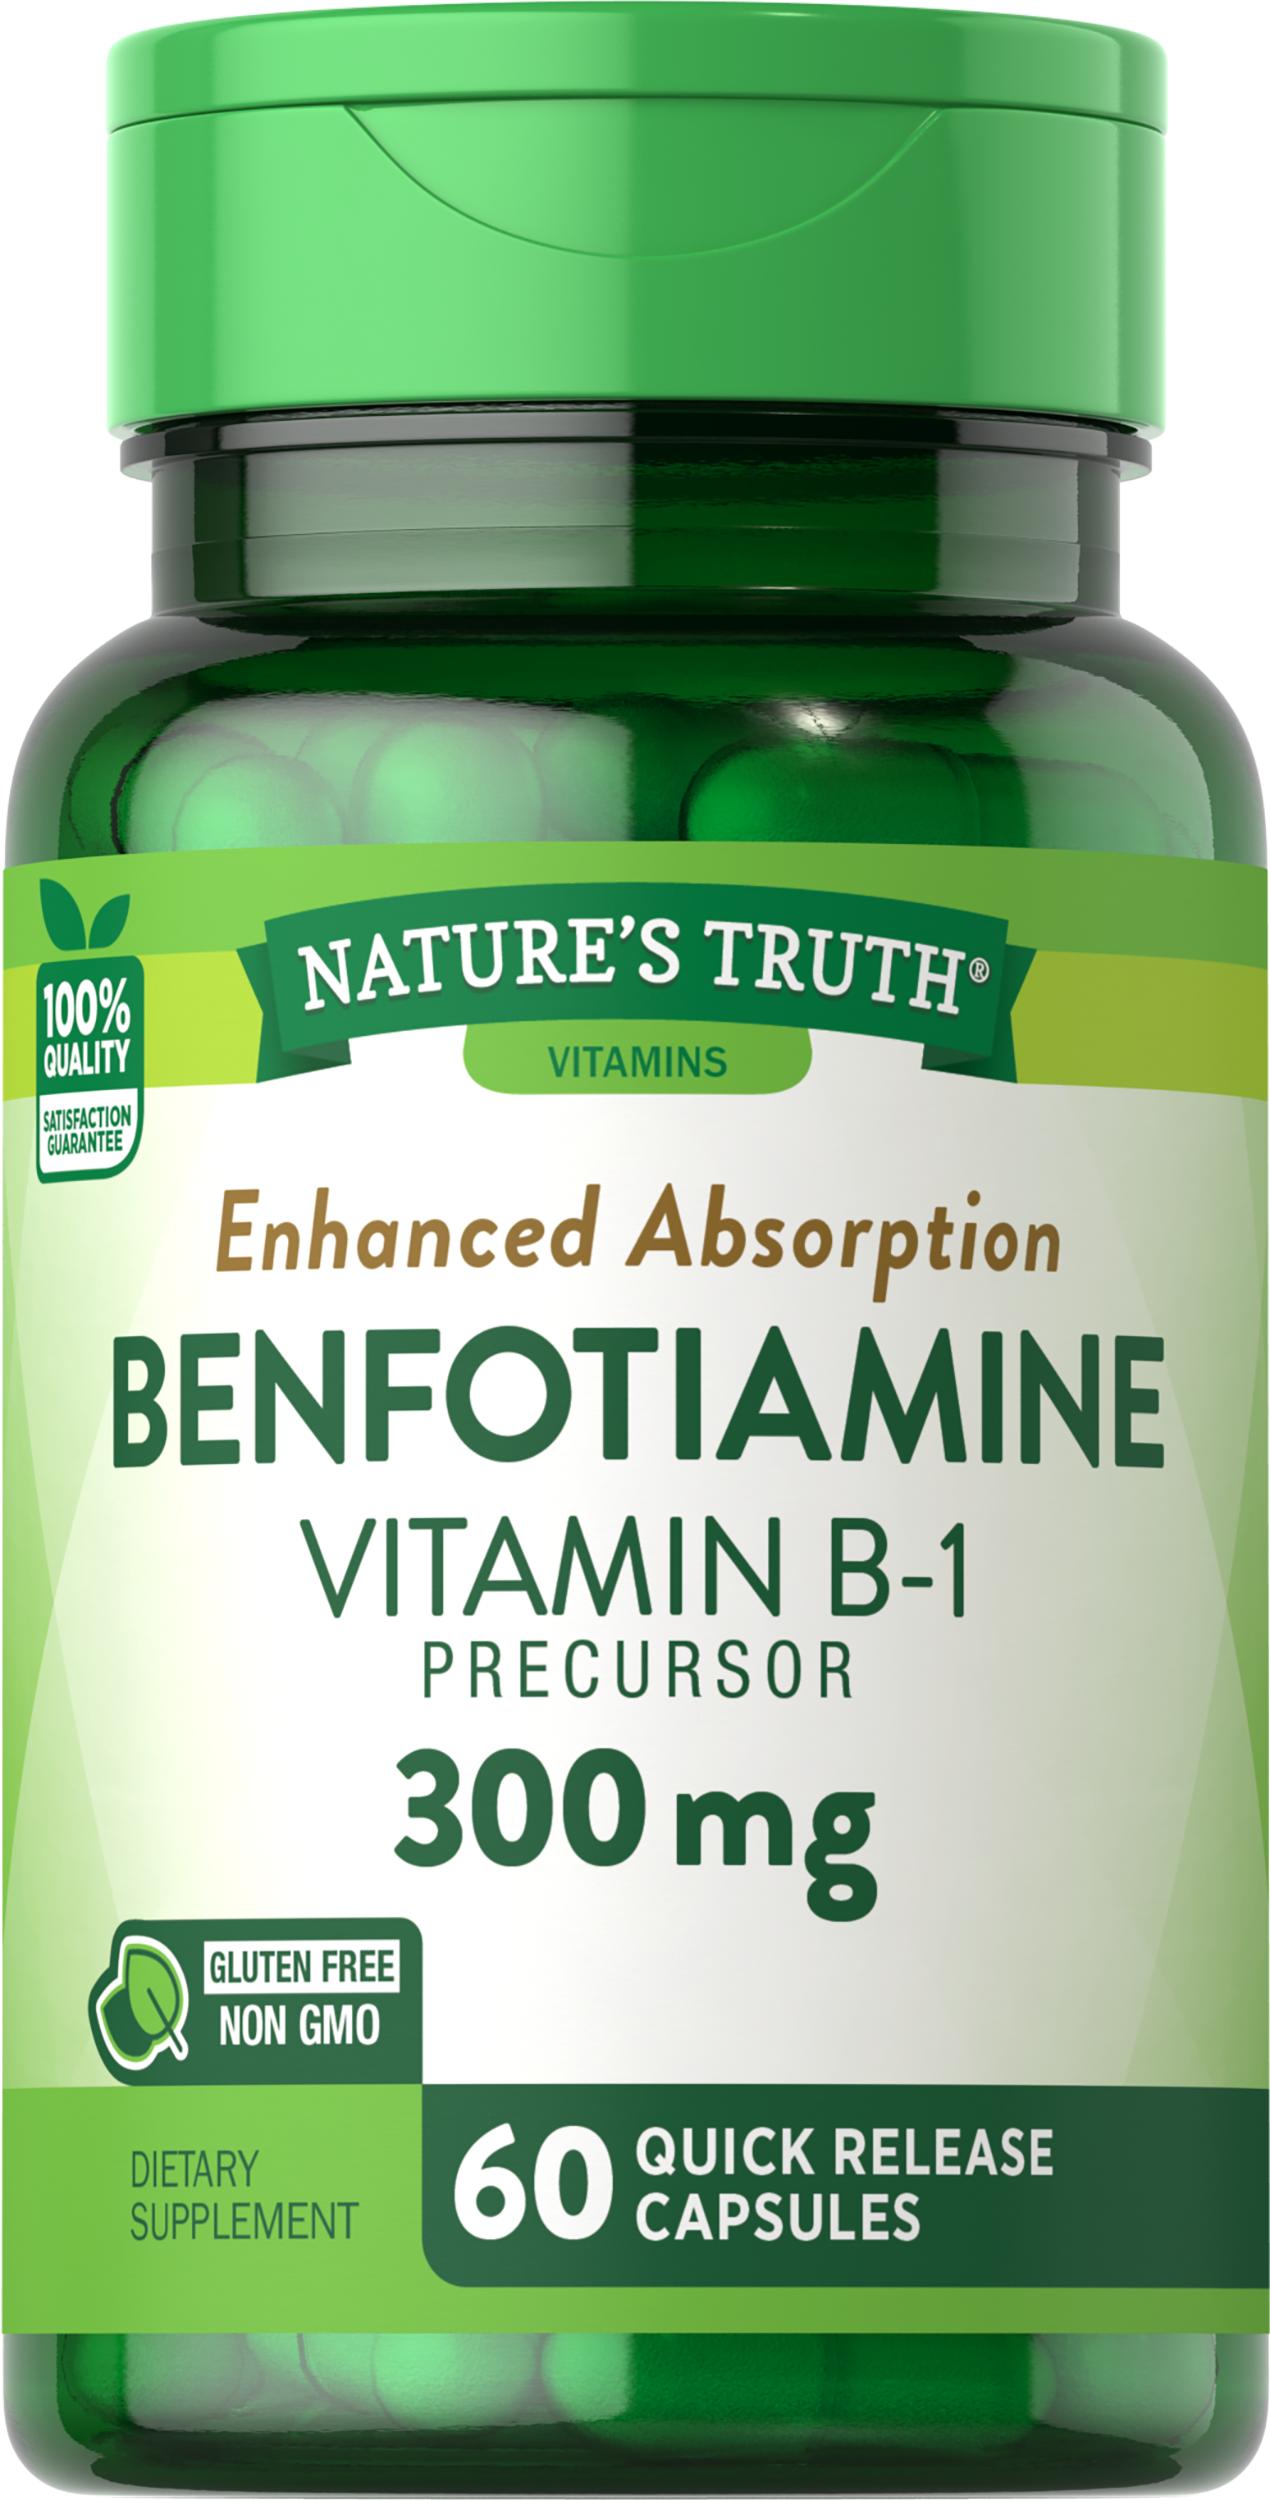 Benfotiamine Vitamin B-1 300 mg | Enhanced Absorption